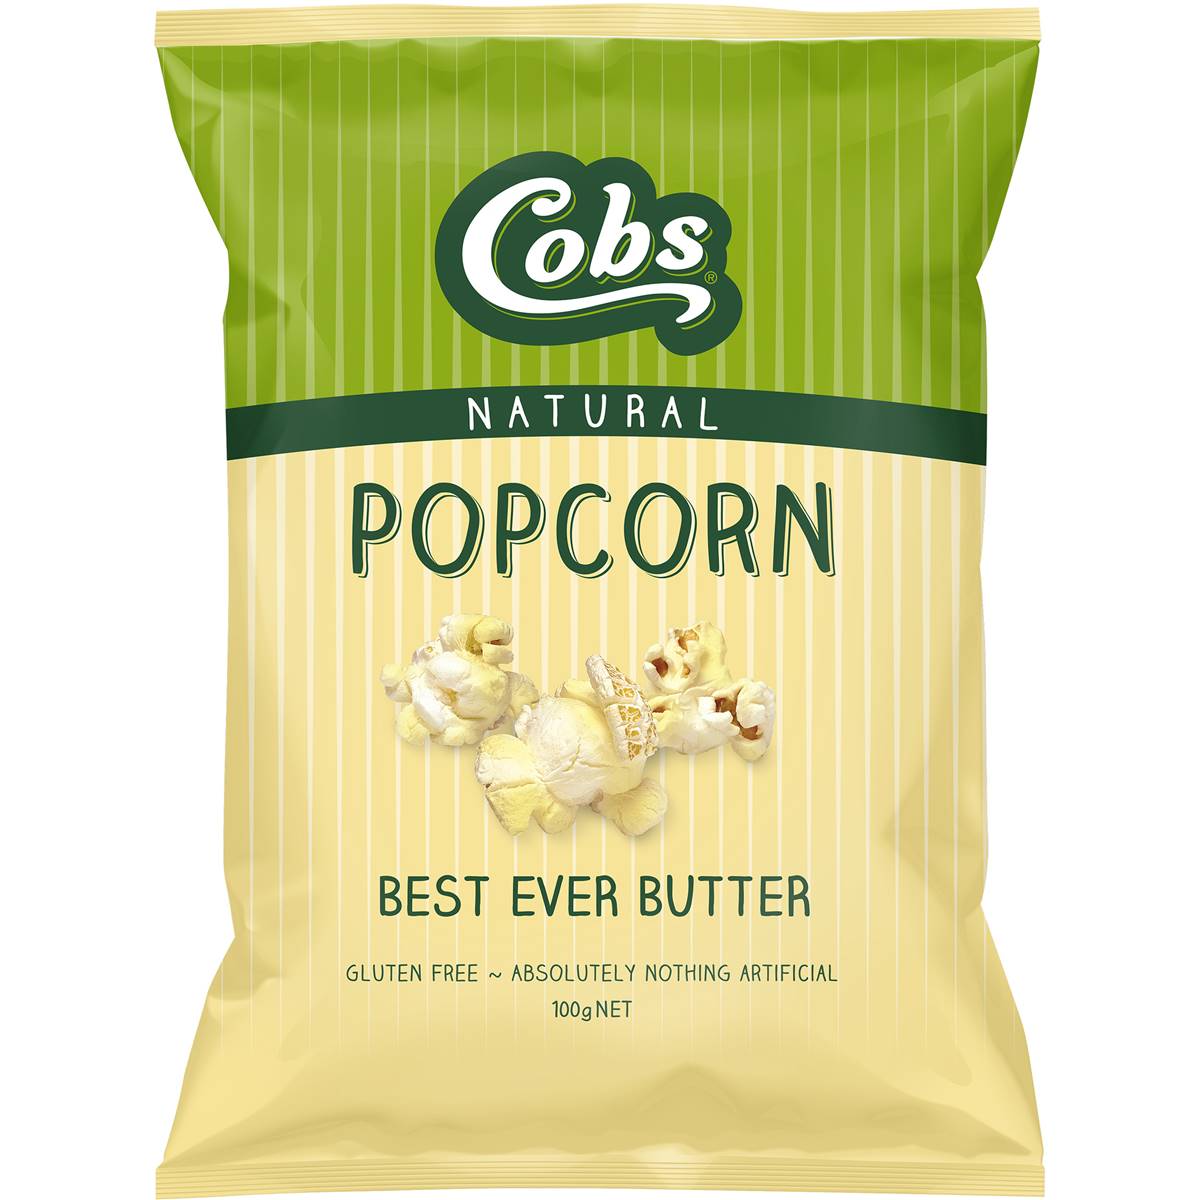 Calories in Cobs Popcorn Best Ever Butter Gluten Free